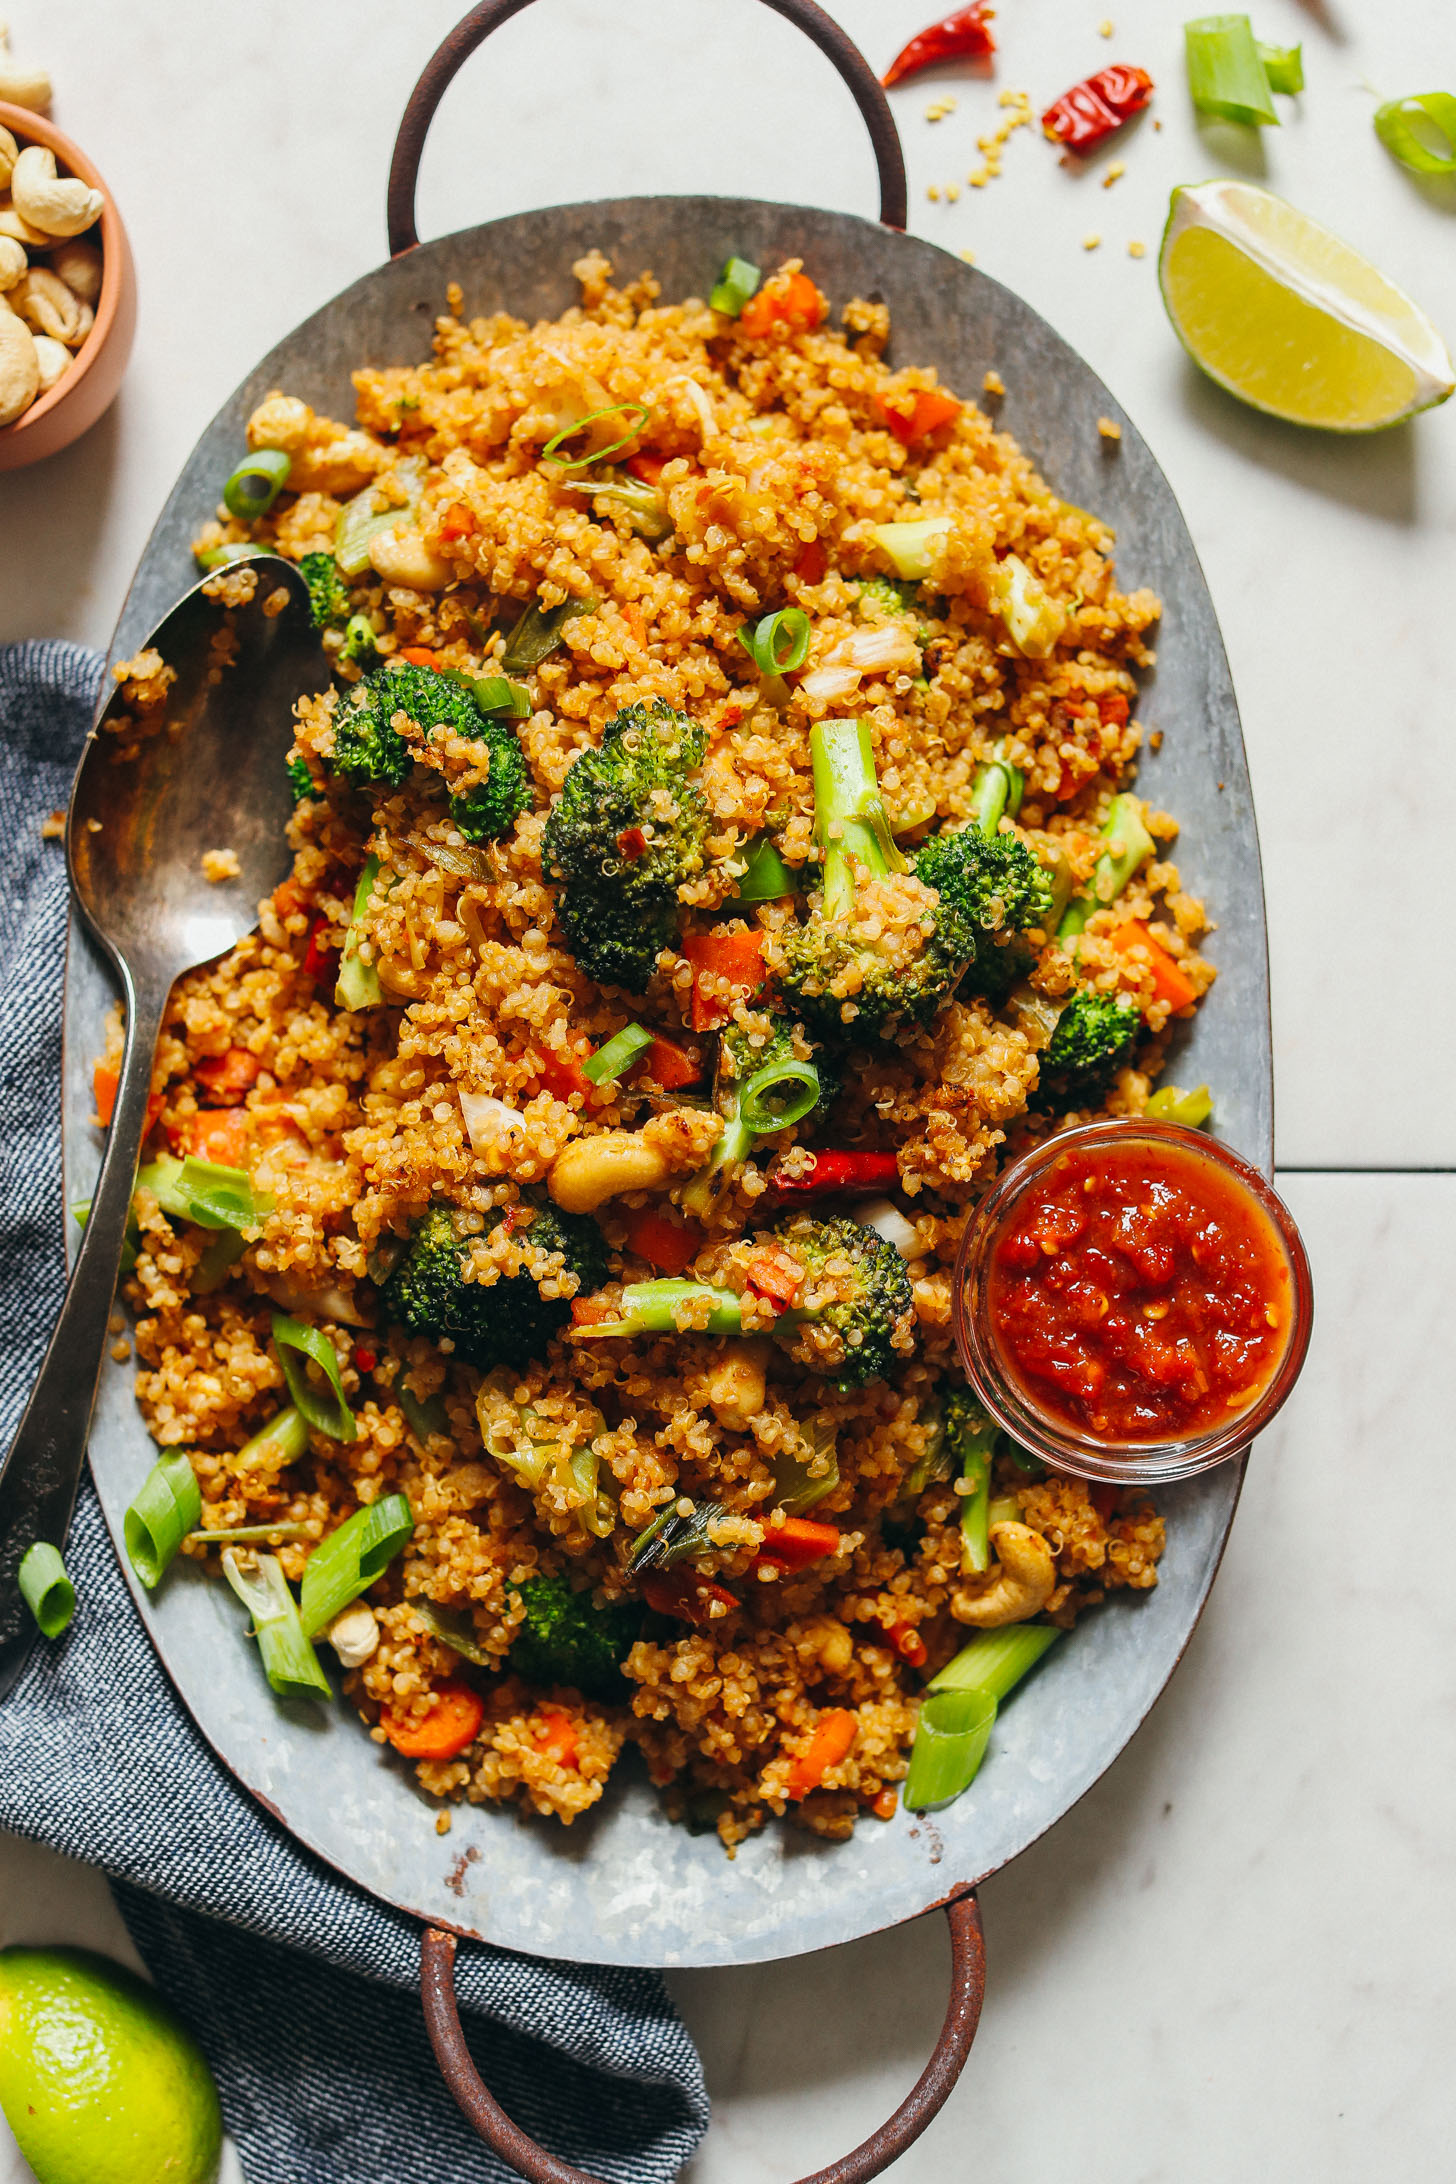 30-minute quinoa "fried rice"